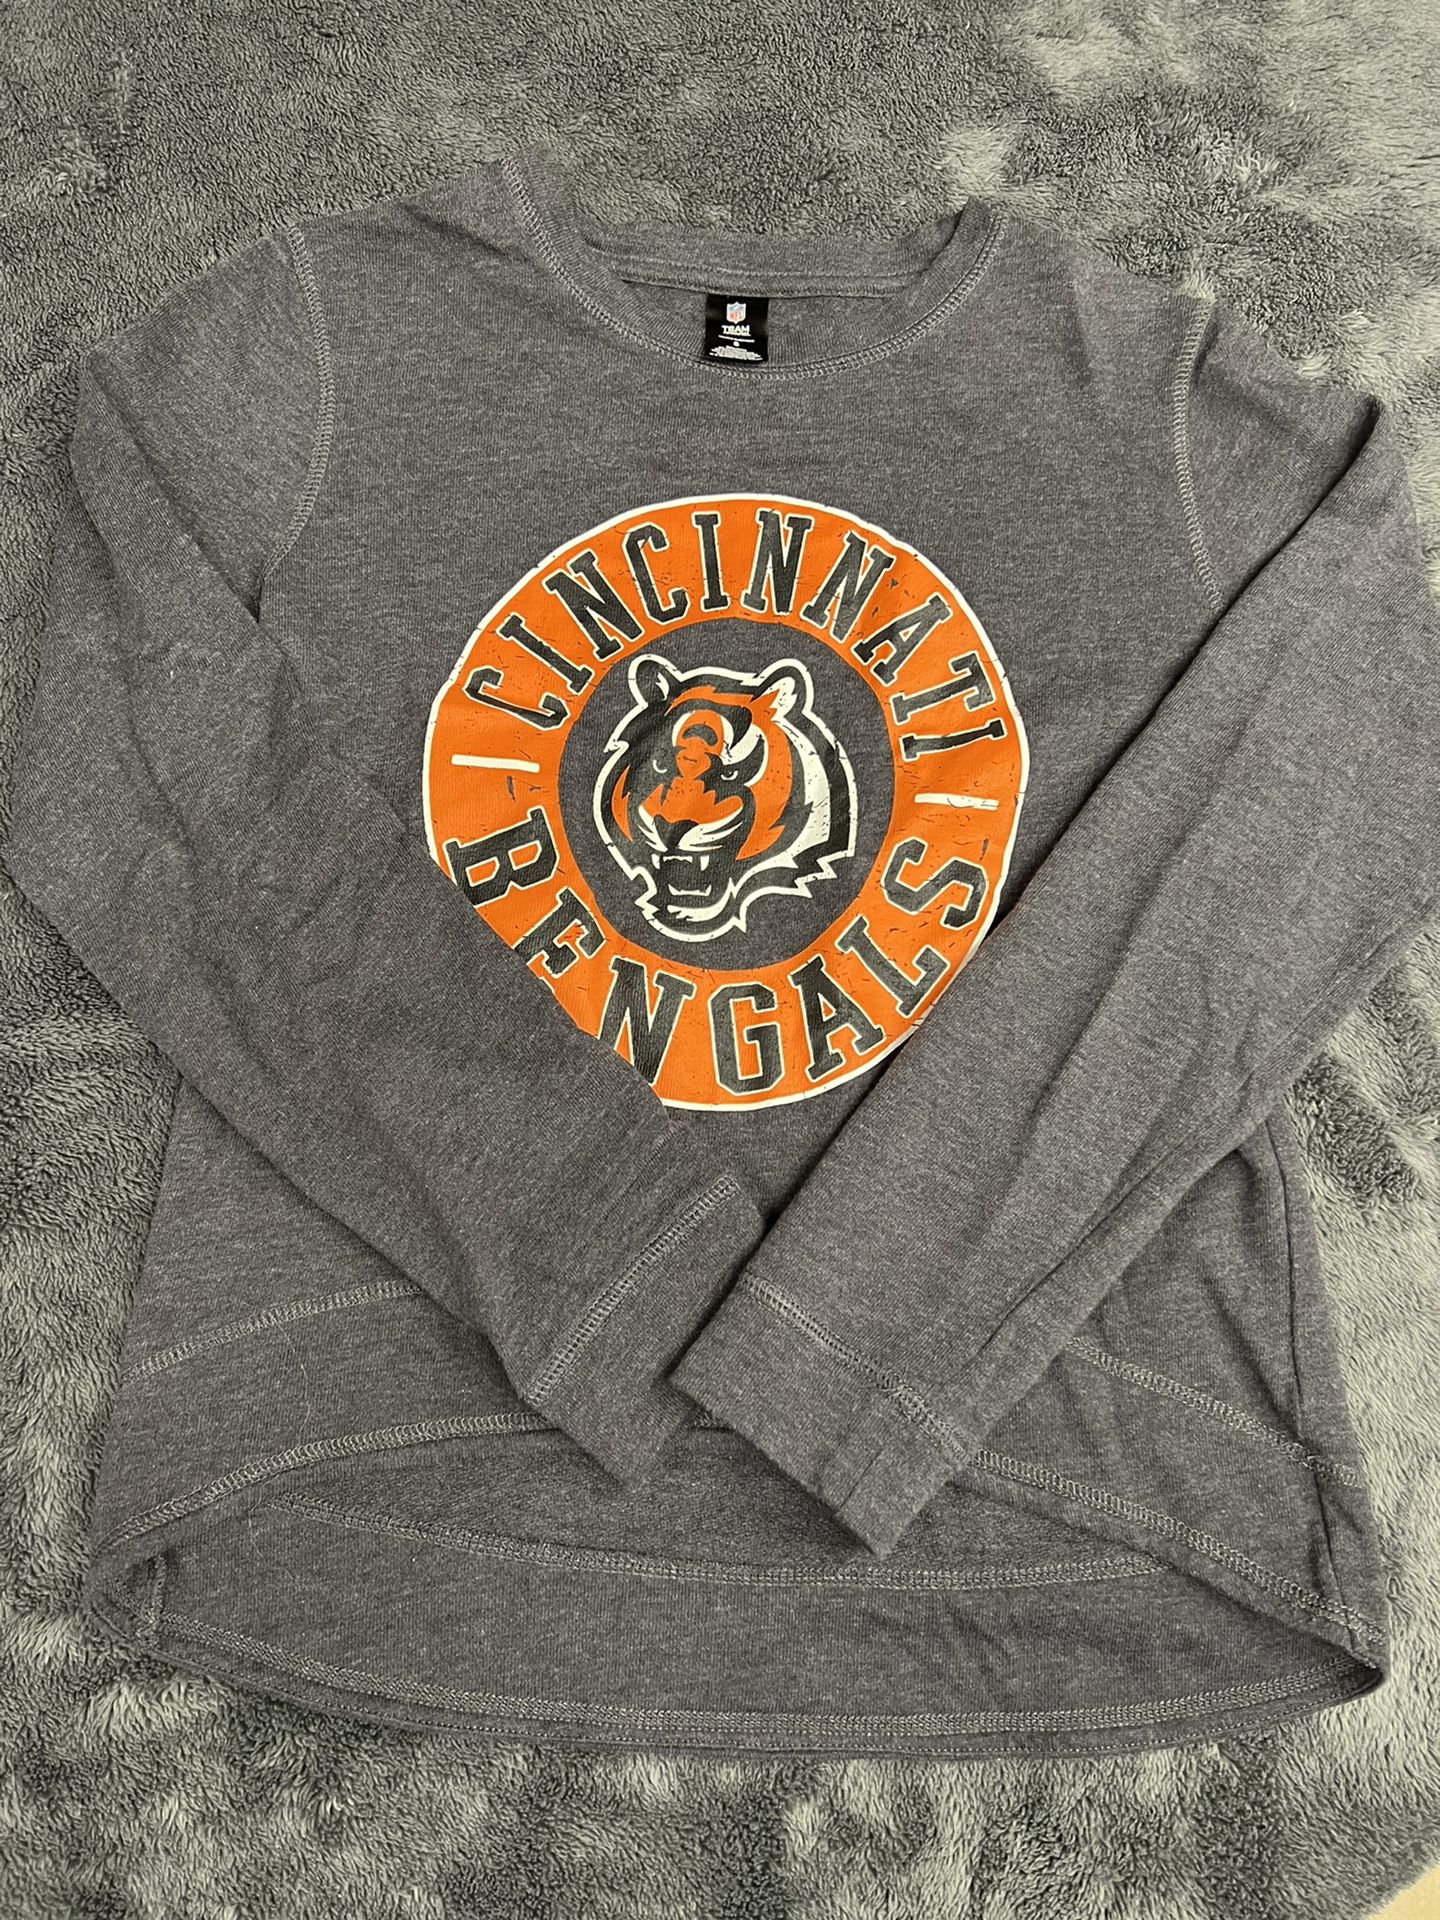 Awesome Cincinnati Bengals Women’s Small Long Sleeve Shirt!  In good shape!